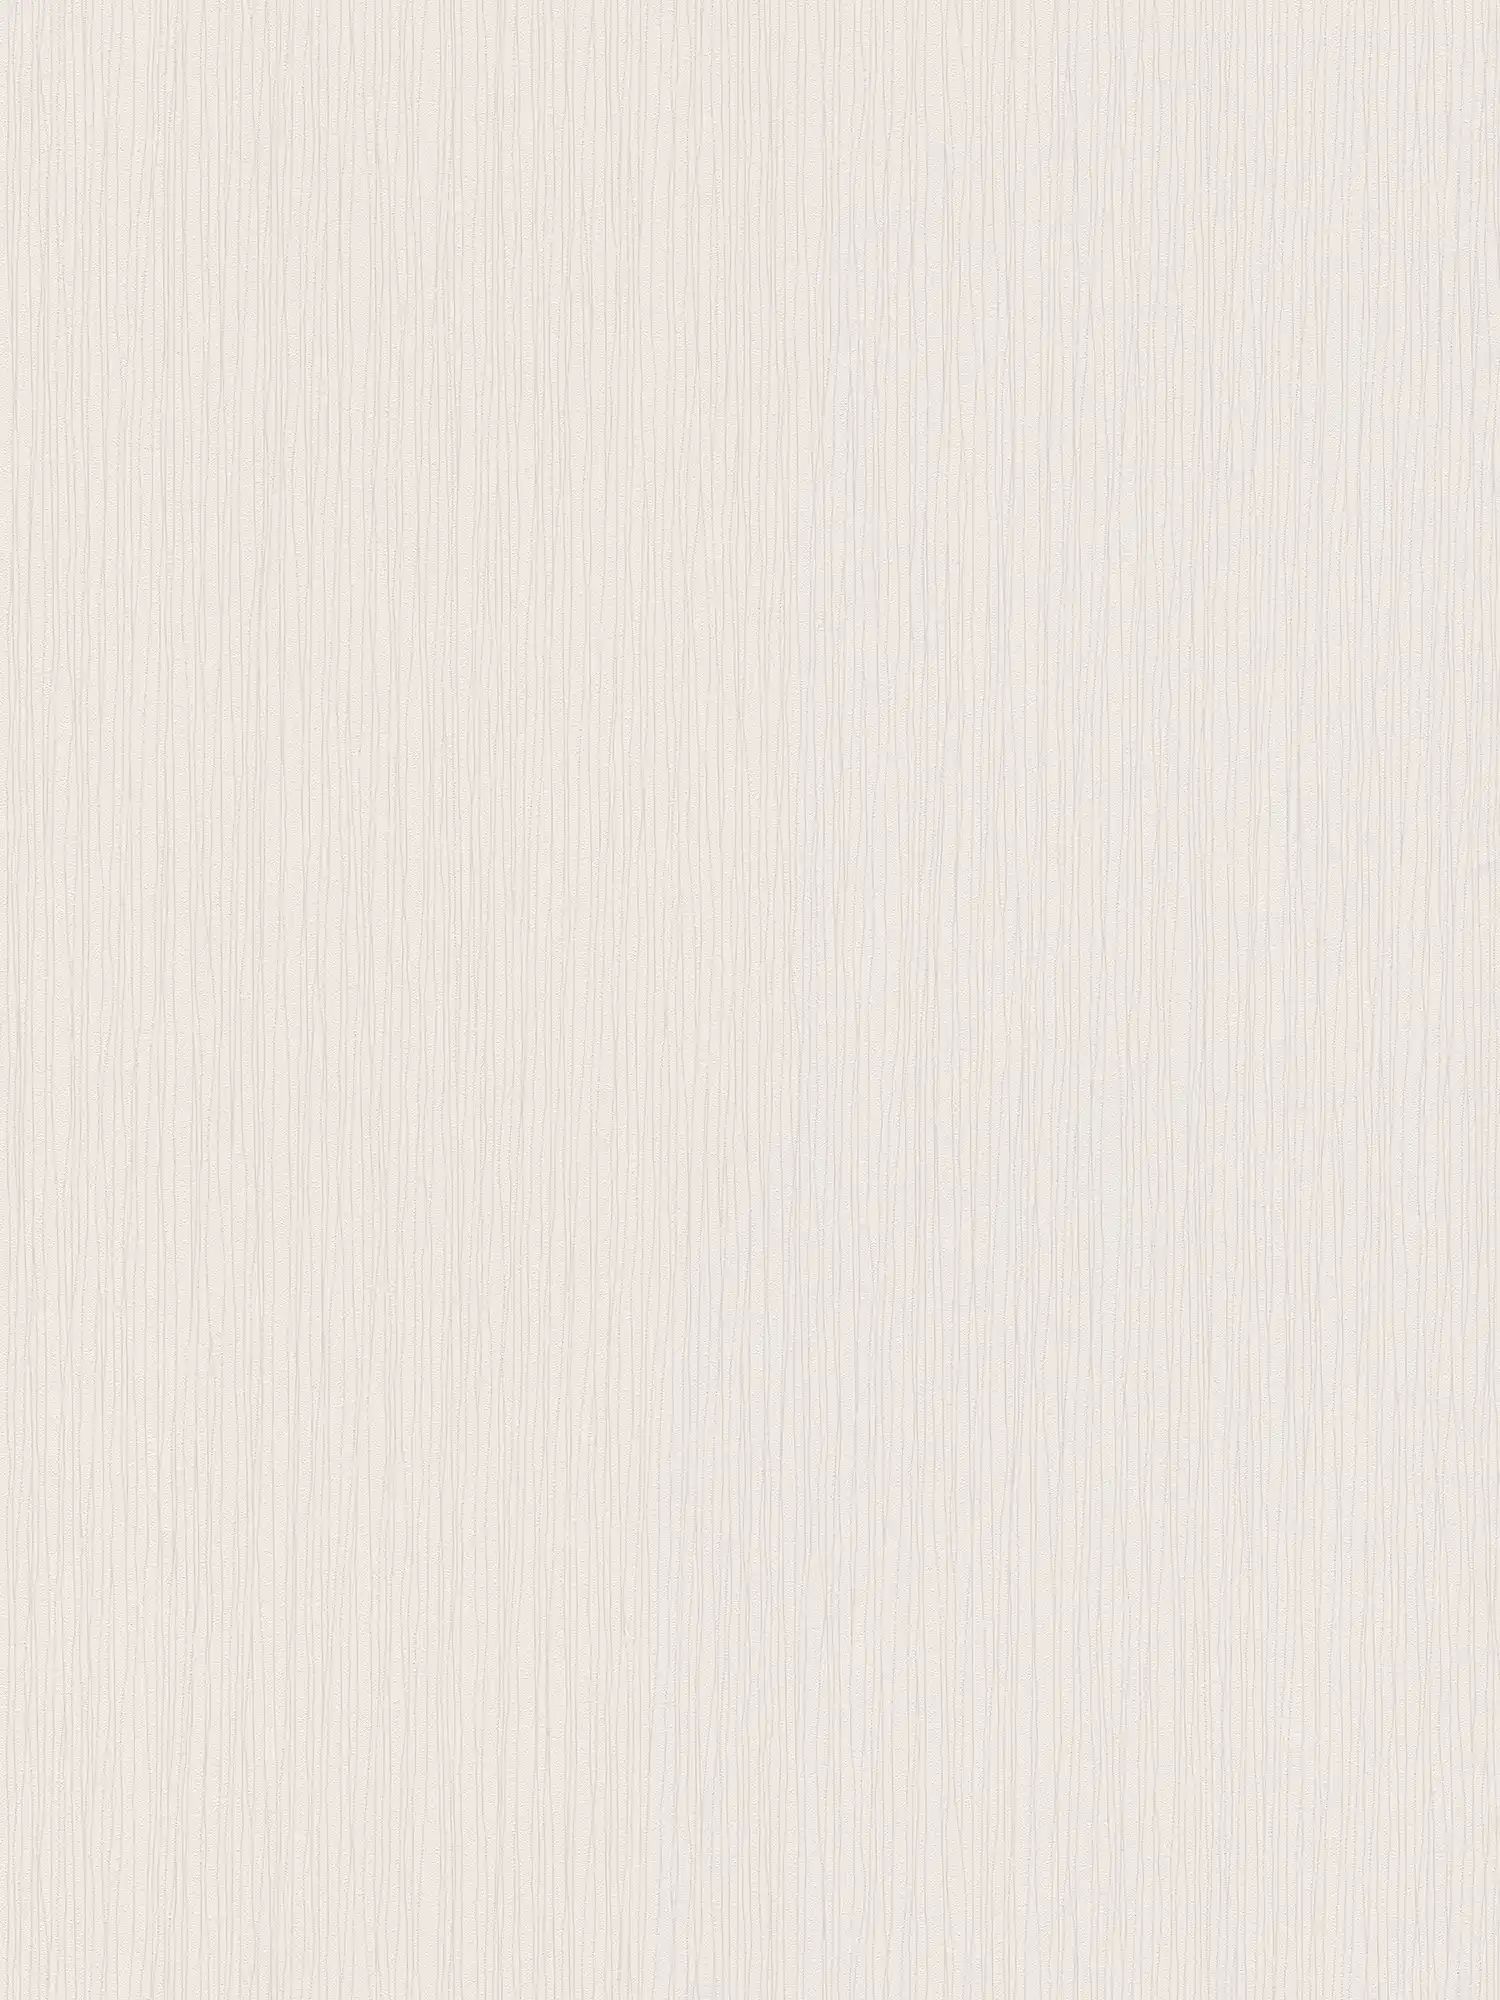 Plain wallpaper with texture pattern & line design - cream
